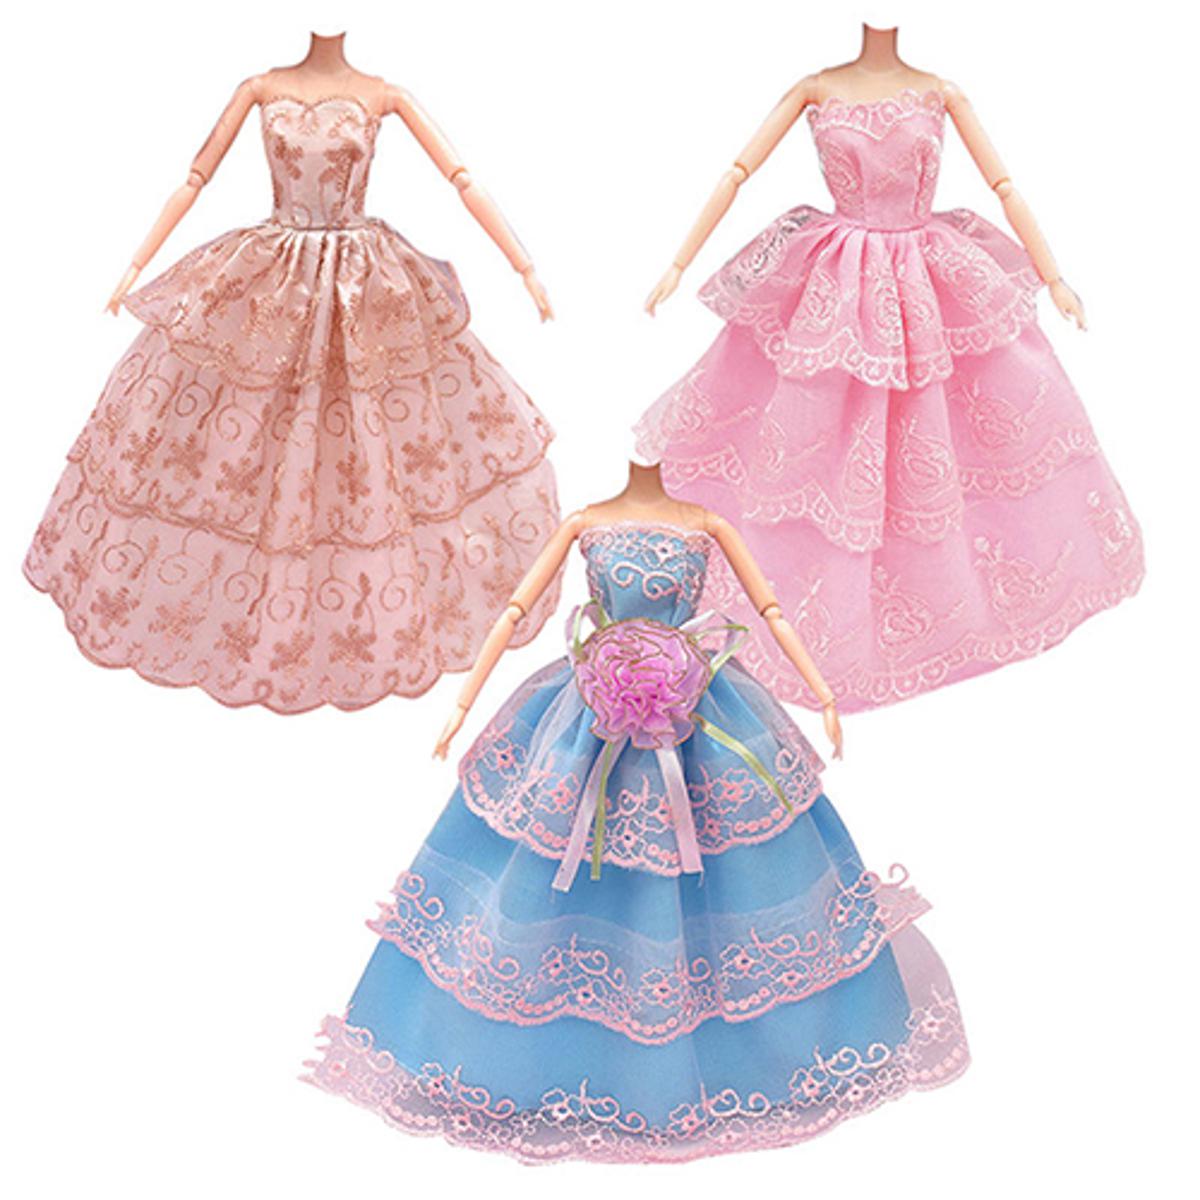 Dolls Dress Up Clothes Dresses Minidress Accessories Party Wear